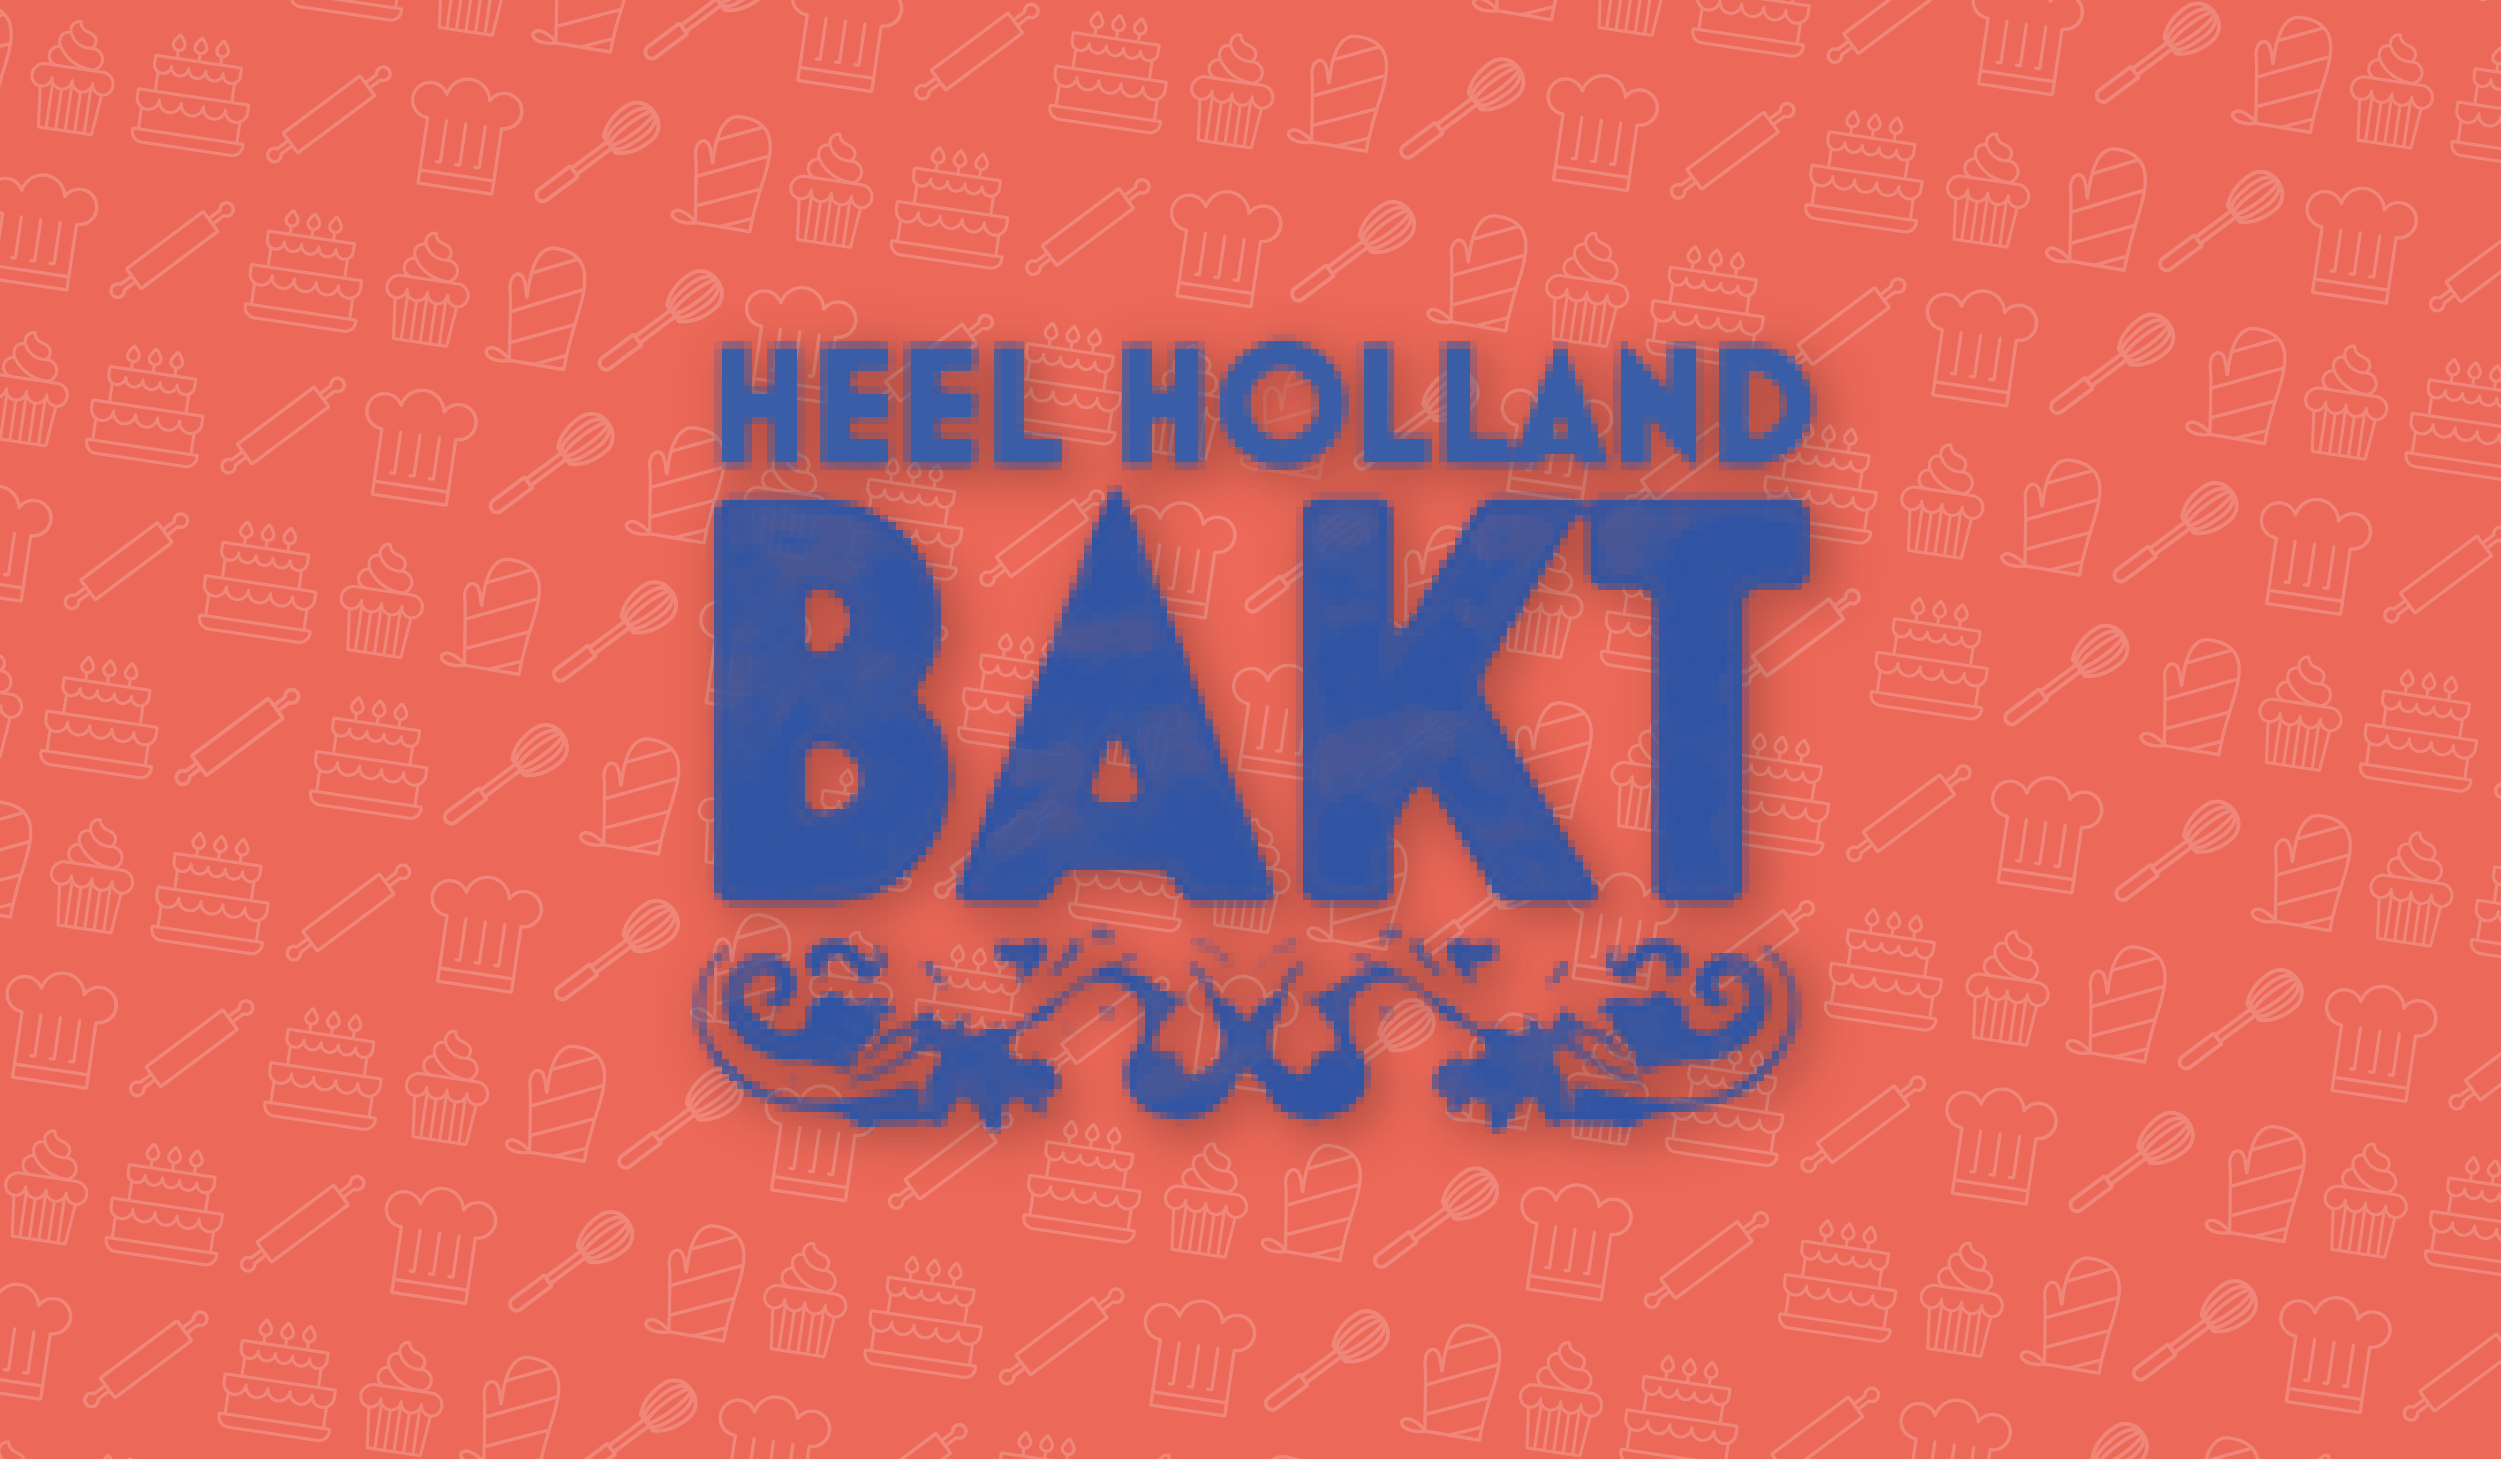 Heel-Holland-Bakt